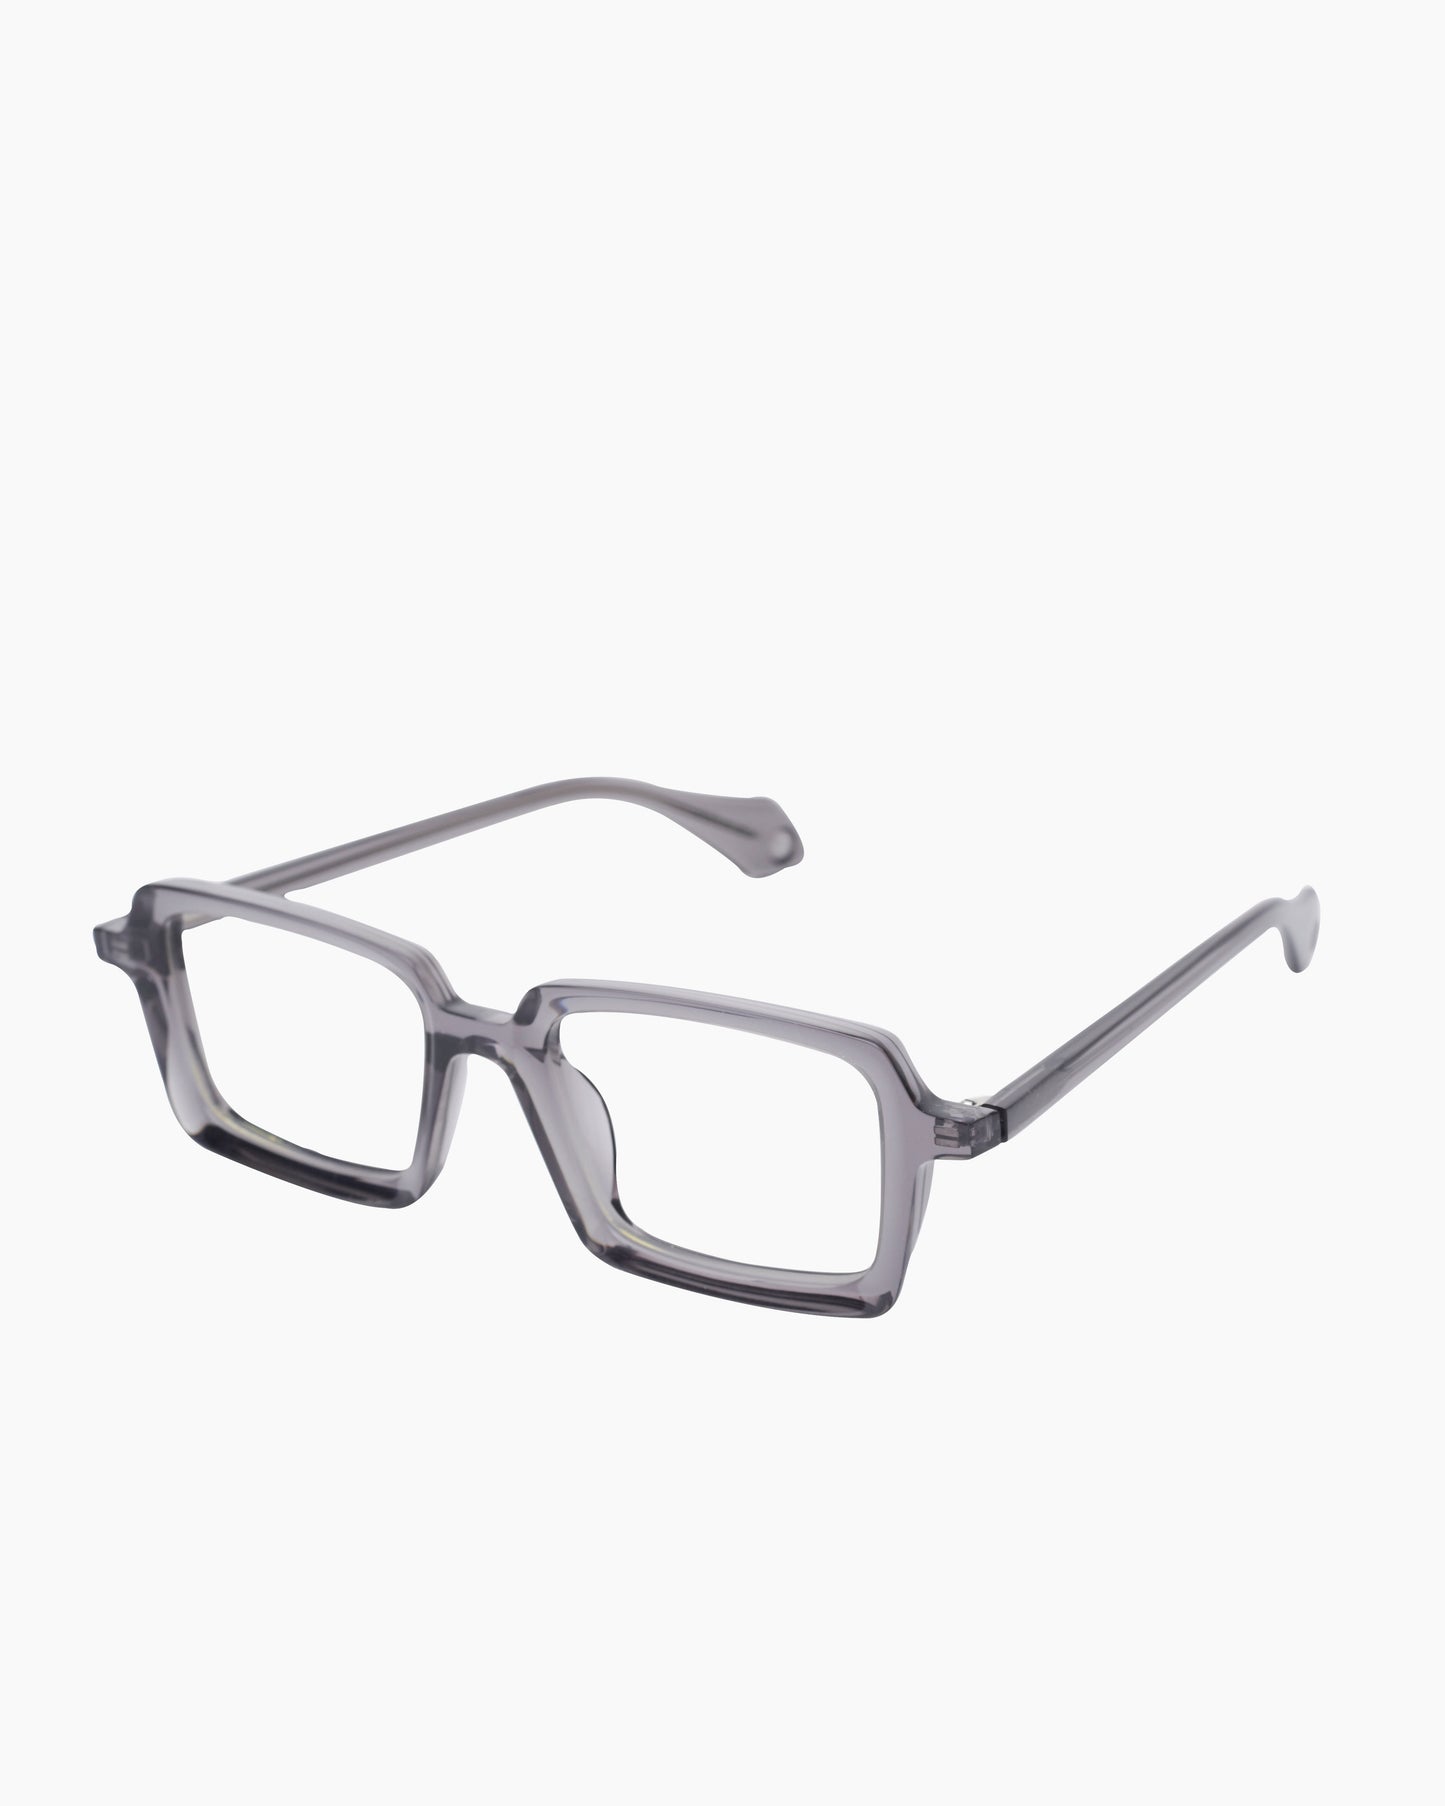 Theo - thousand+86 - 7 | glasses bar